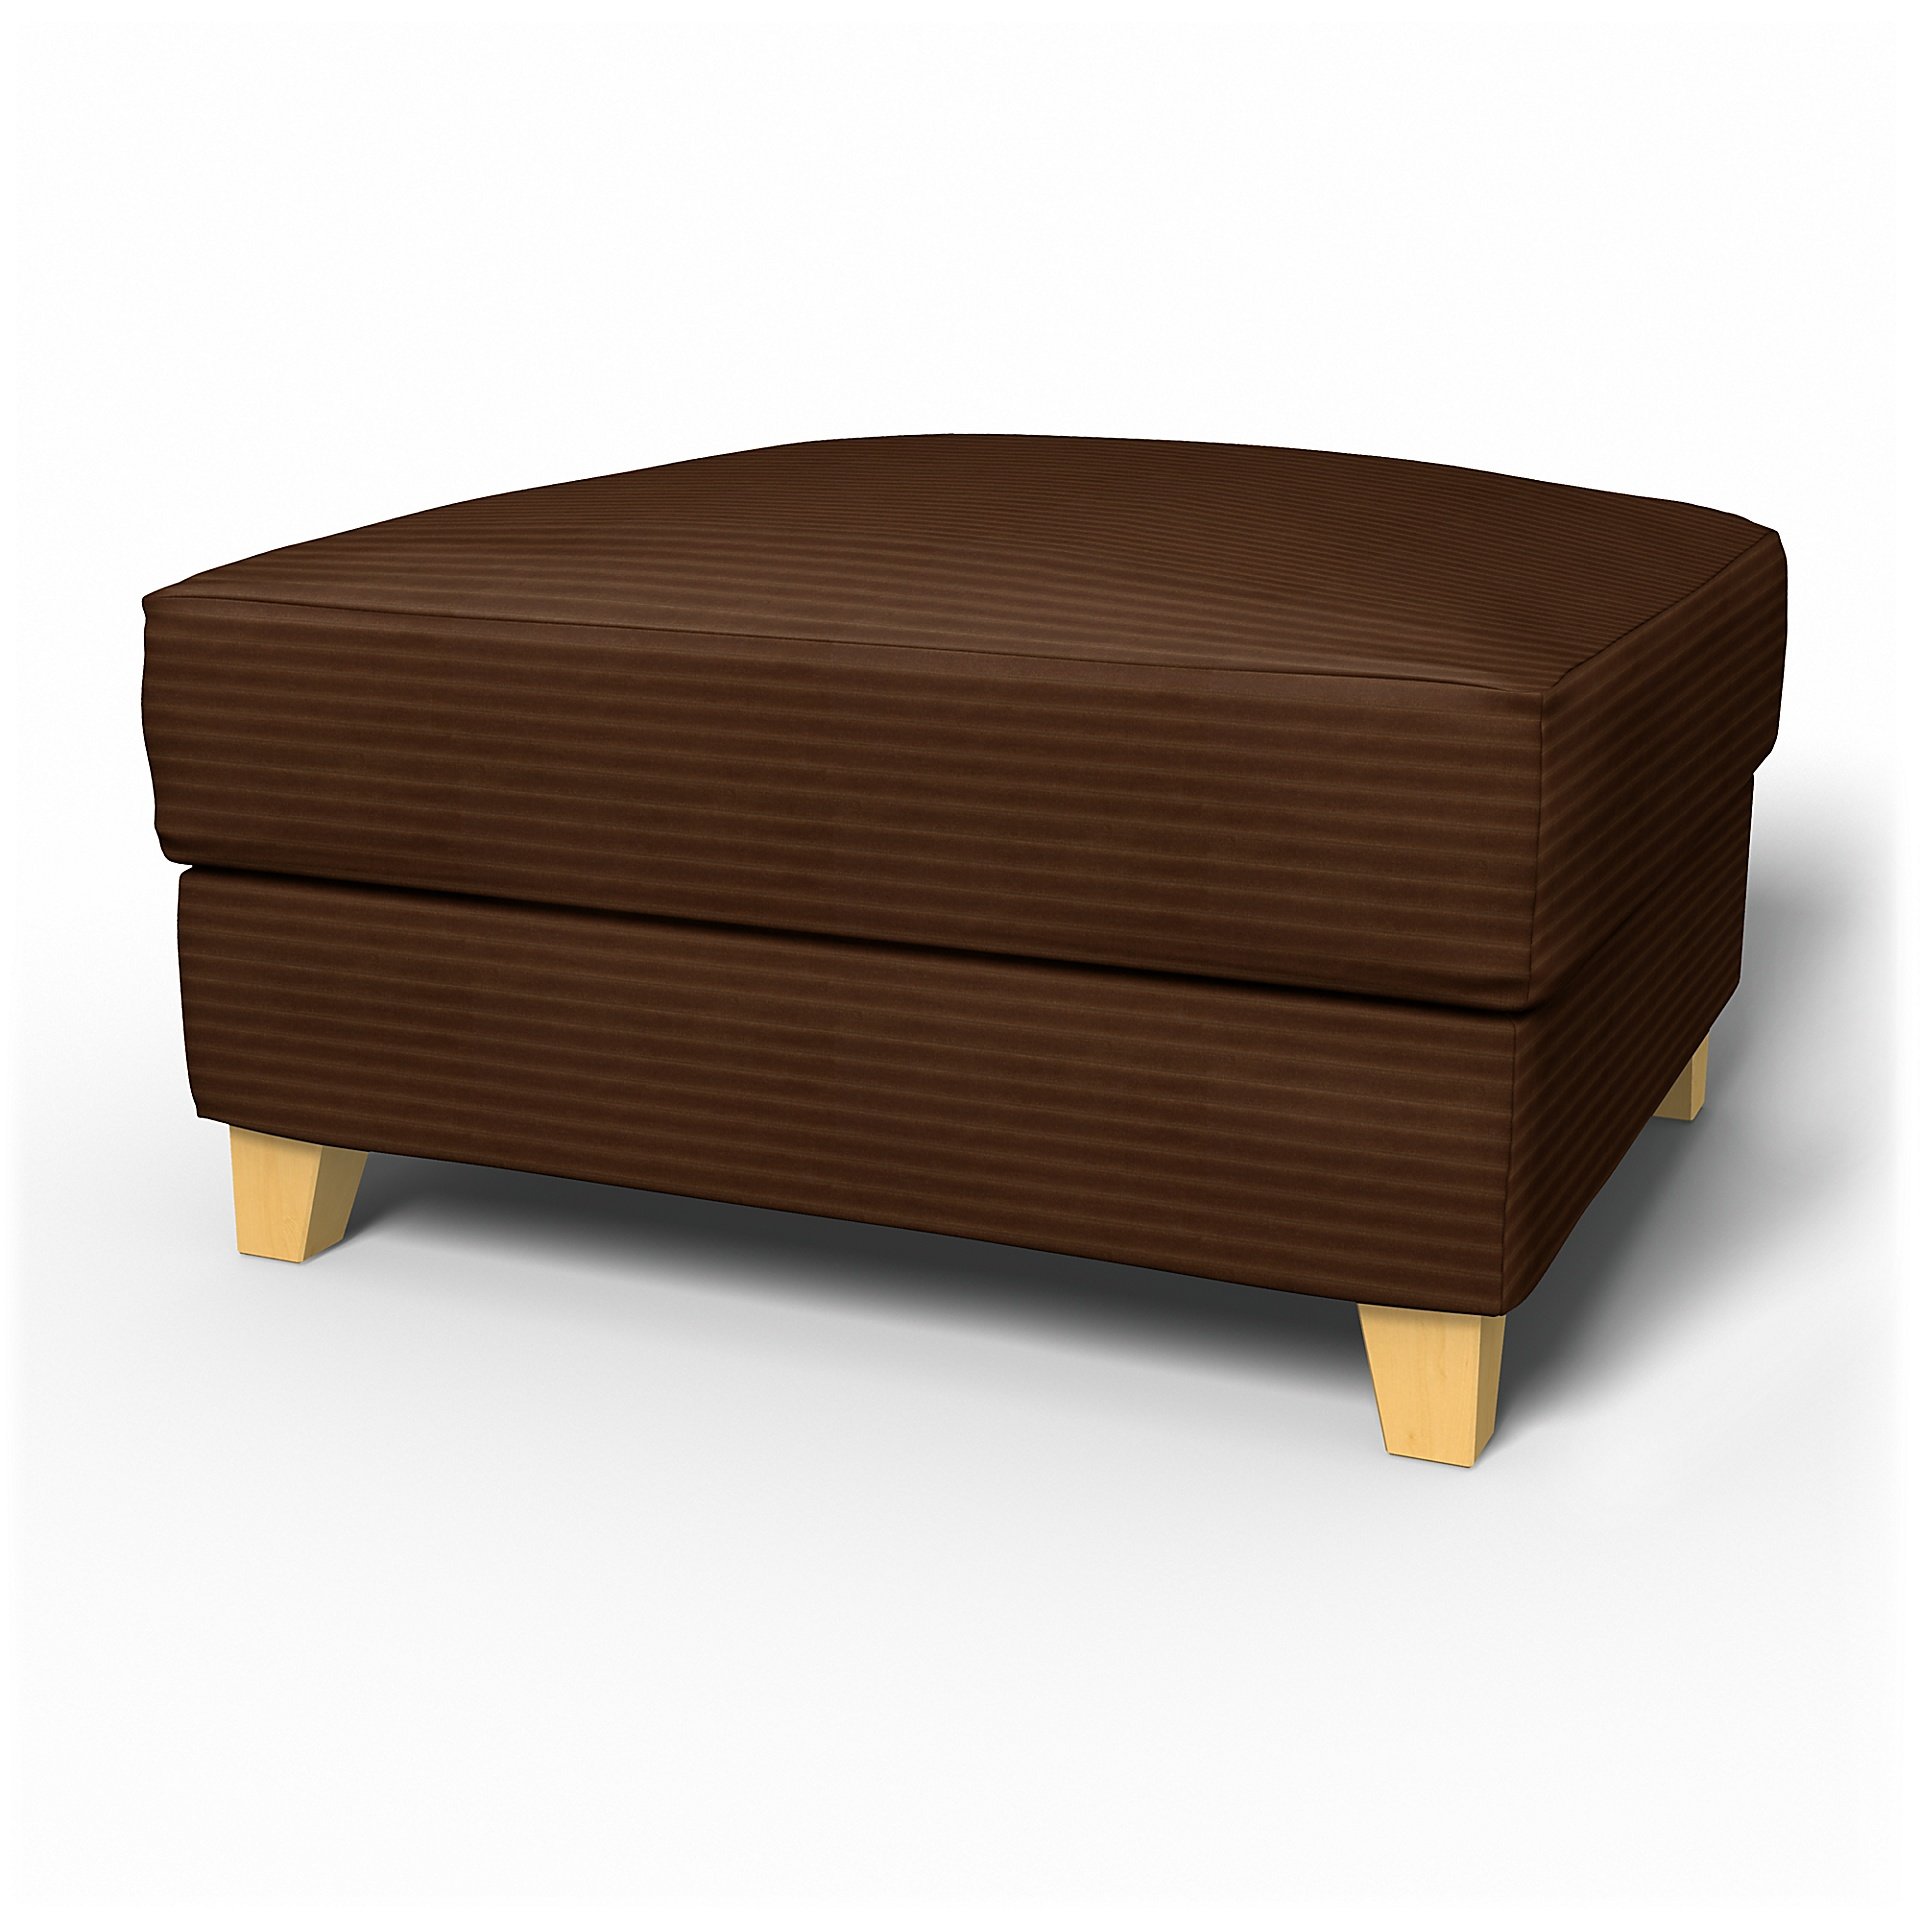 IKEA - Backa Footstool Cover, Chocolate Brown, Corduroy - Bemz